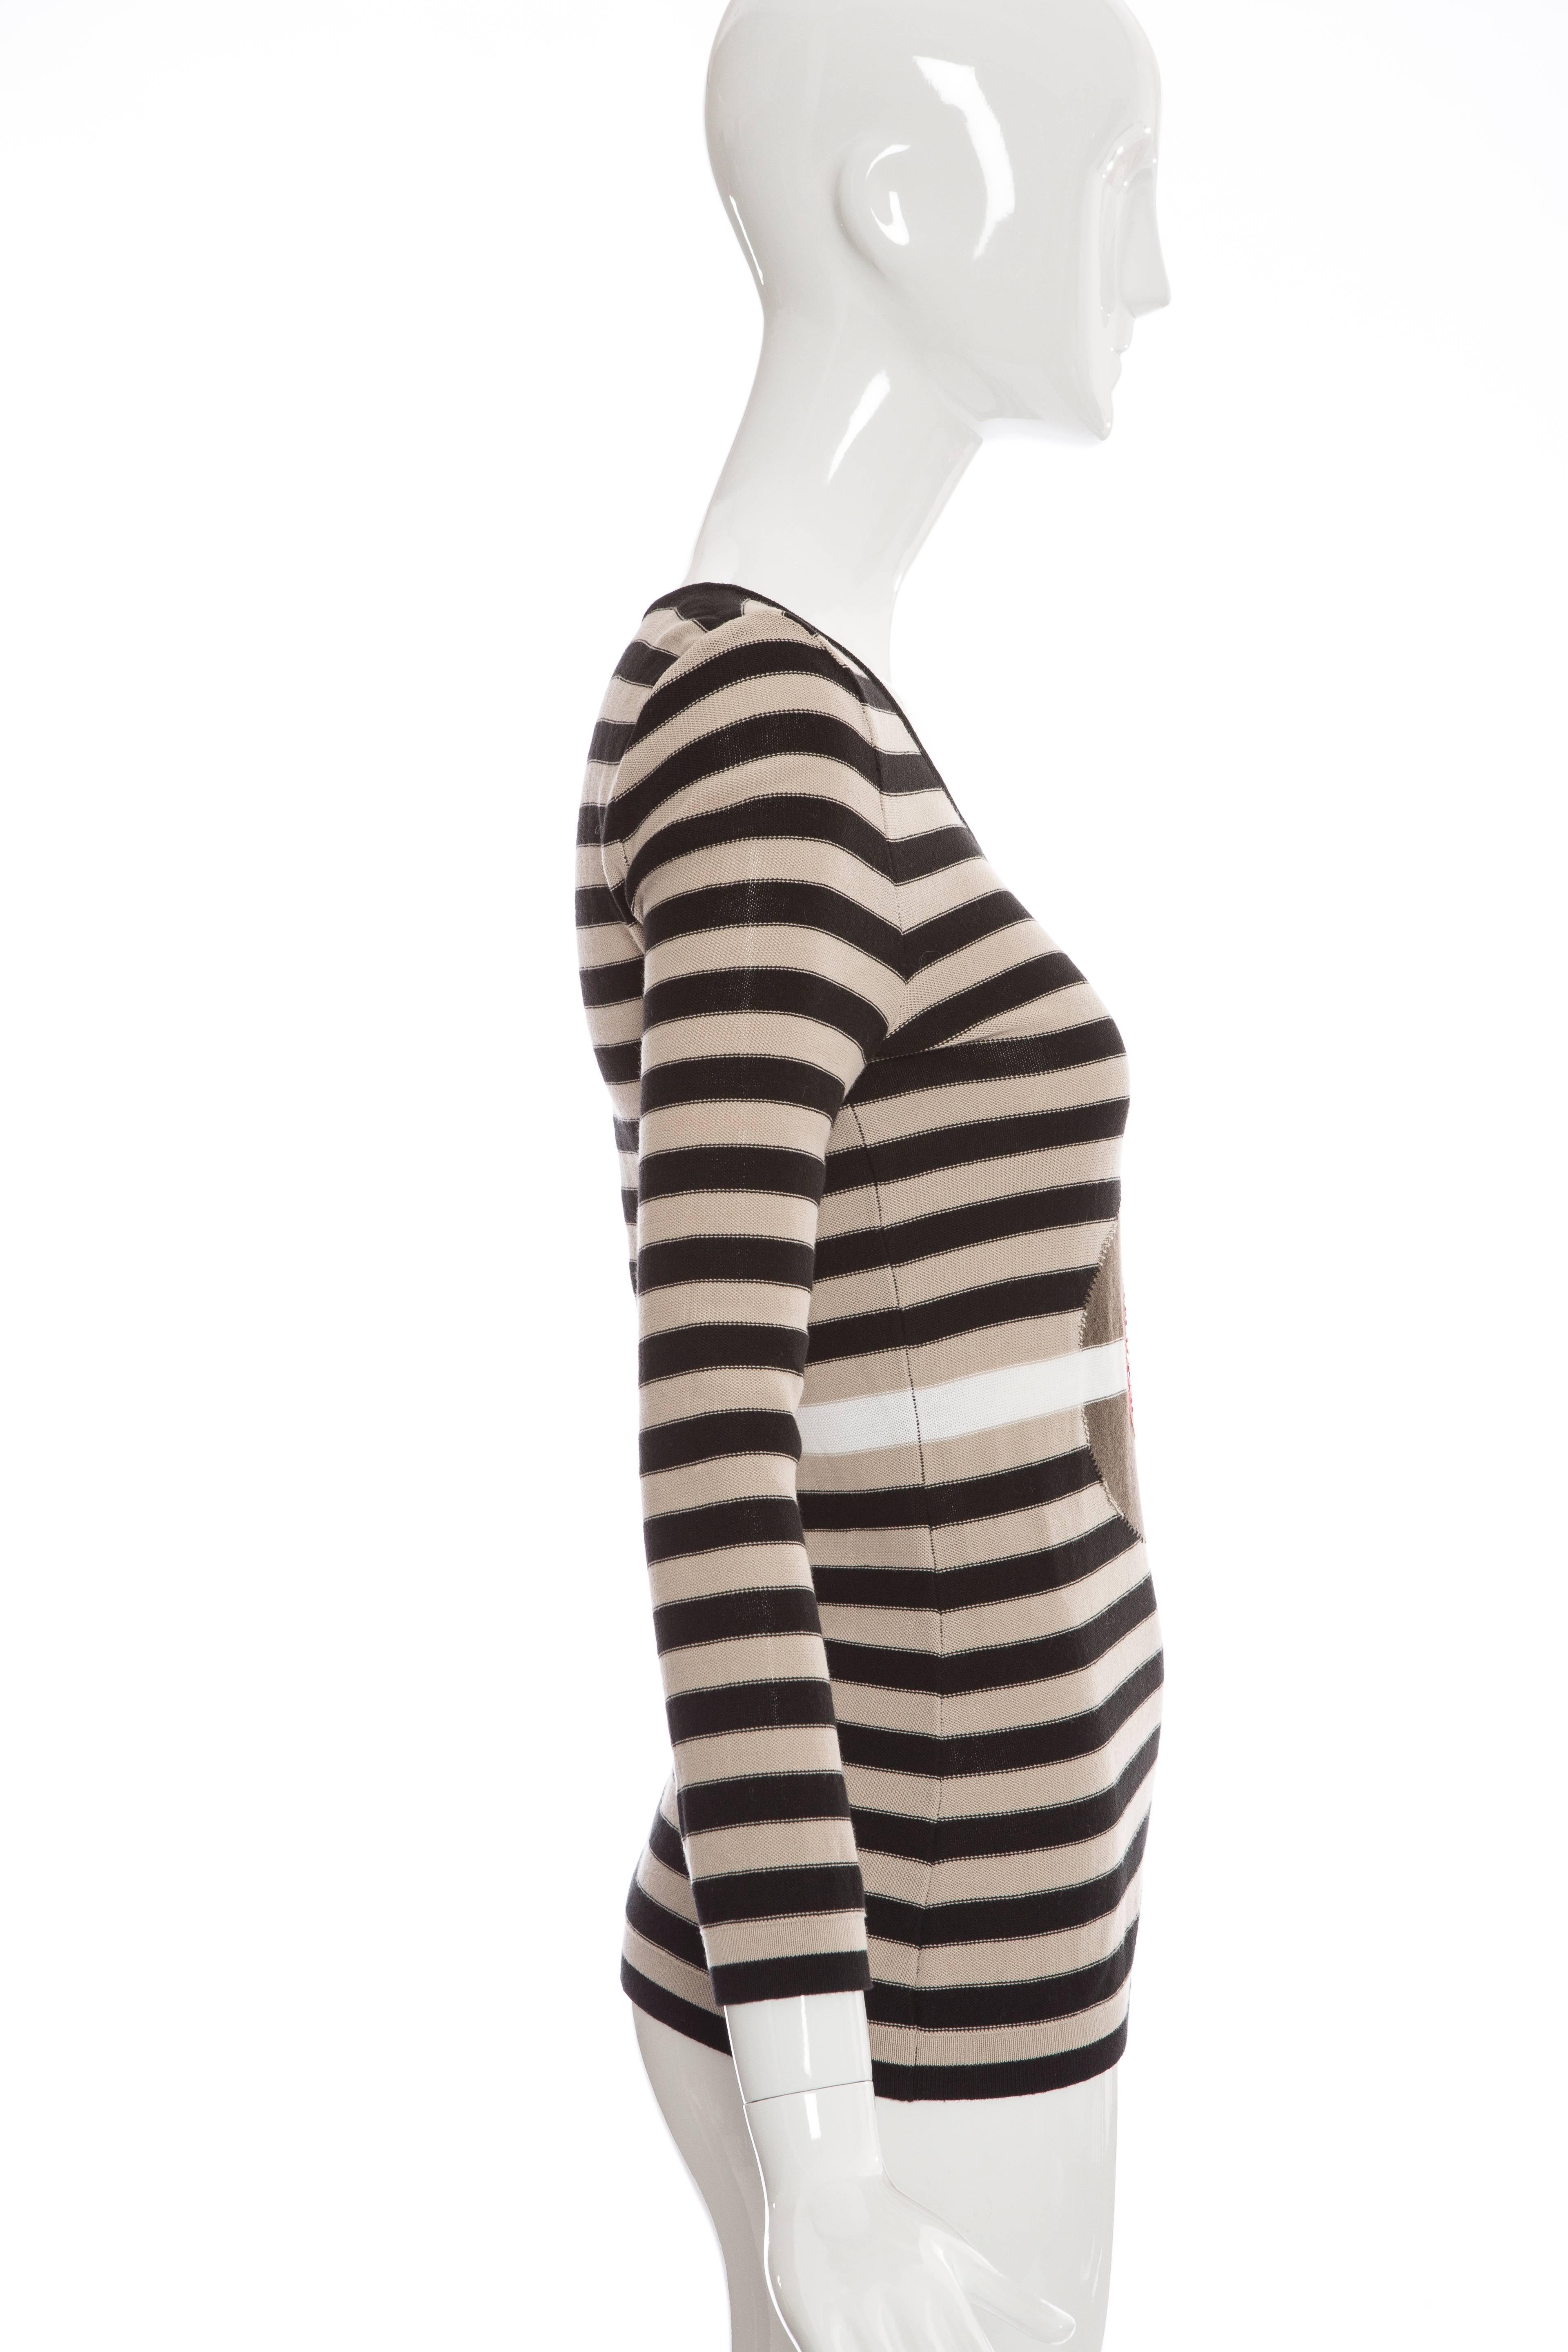 Black Sonia Rykiel Striped Cotton Knit Sweater, Spring - Summer 2002